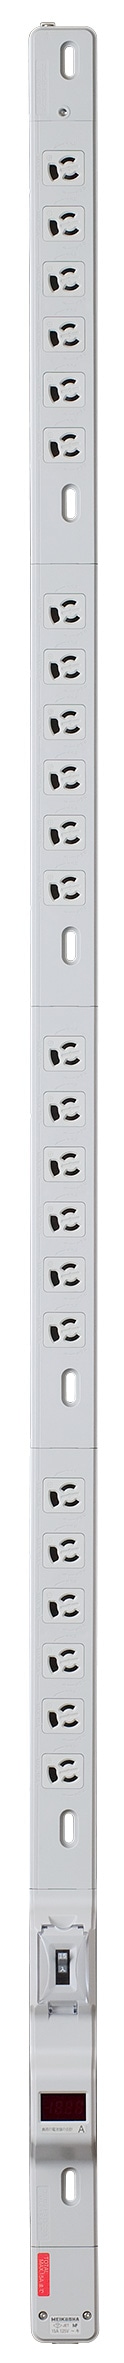 FM15Aコンセントバー(24コ口)15A安全ブレーカ･電流監視装置付